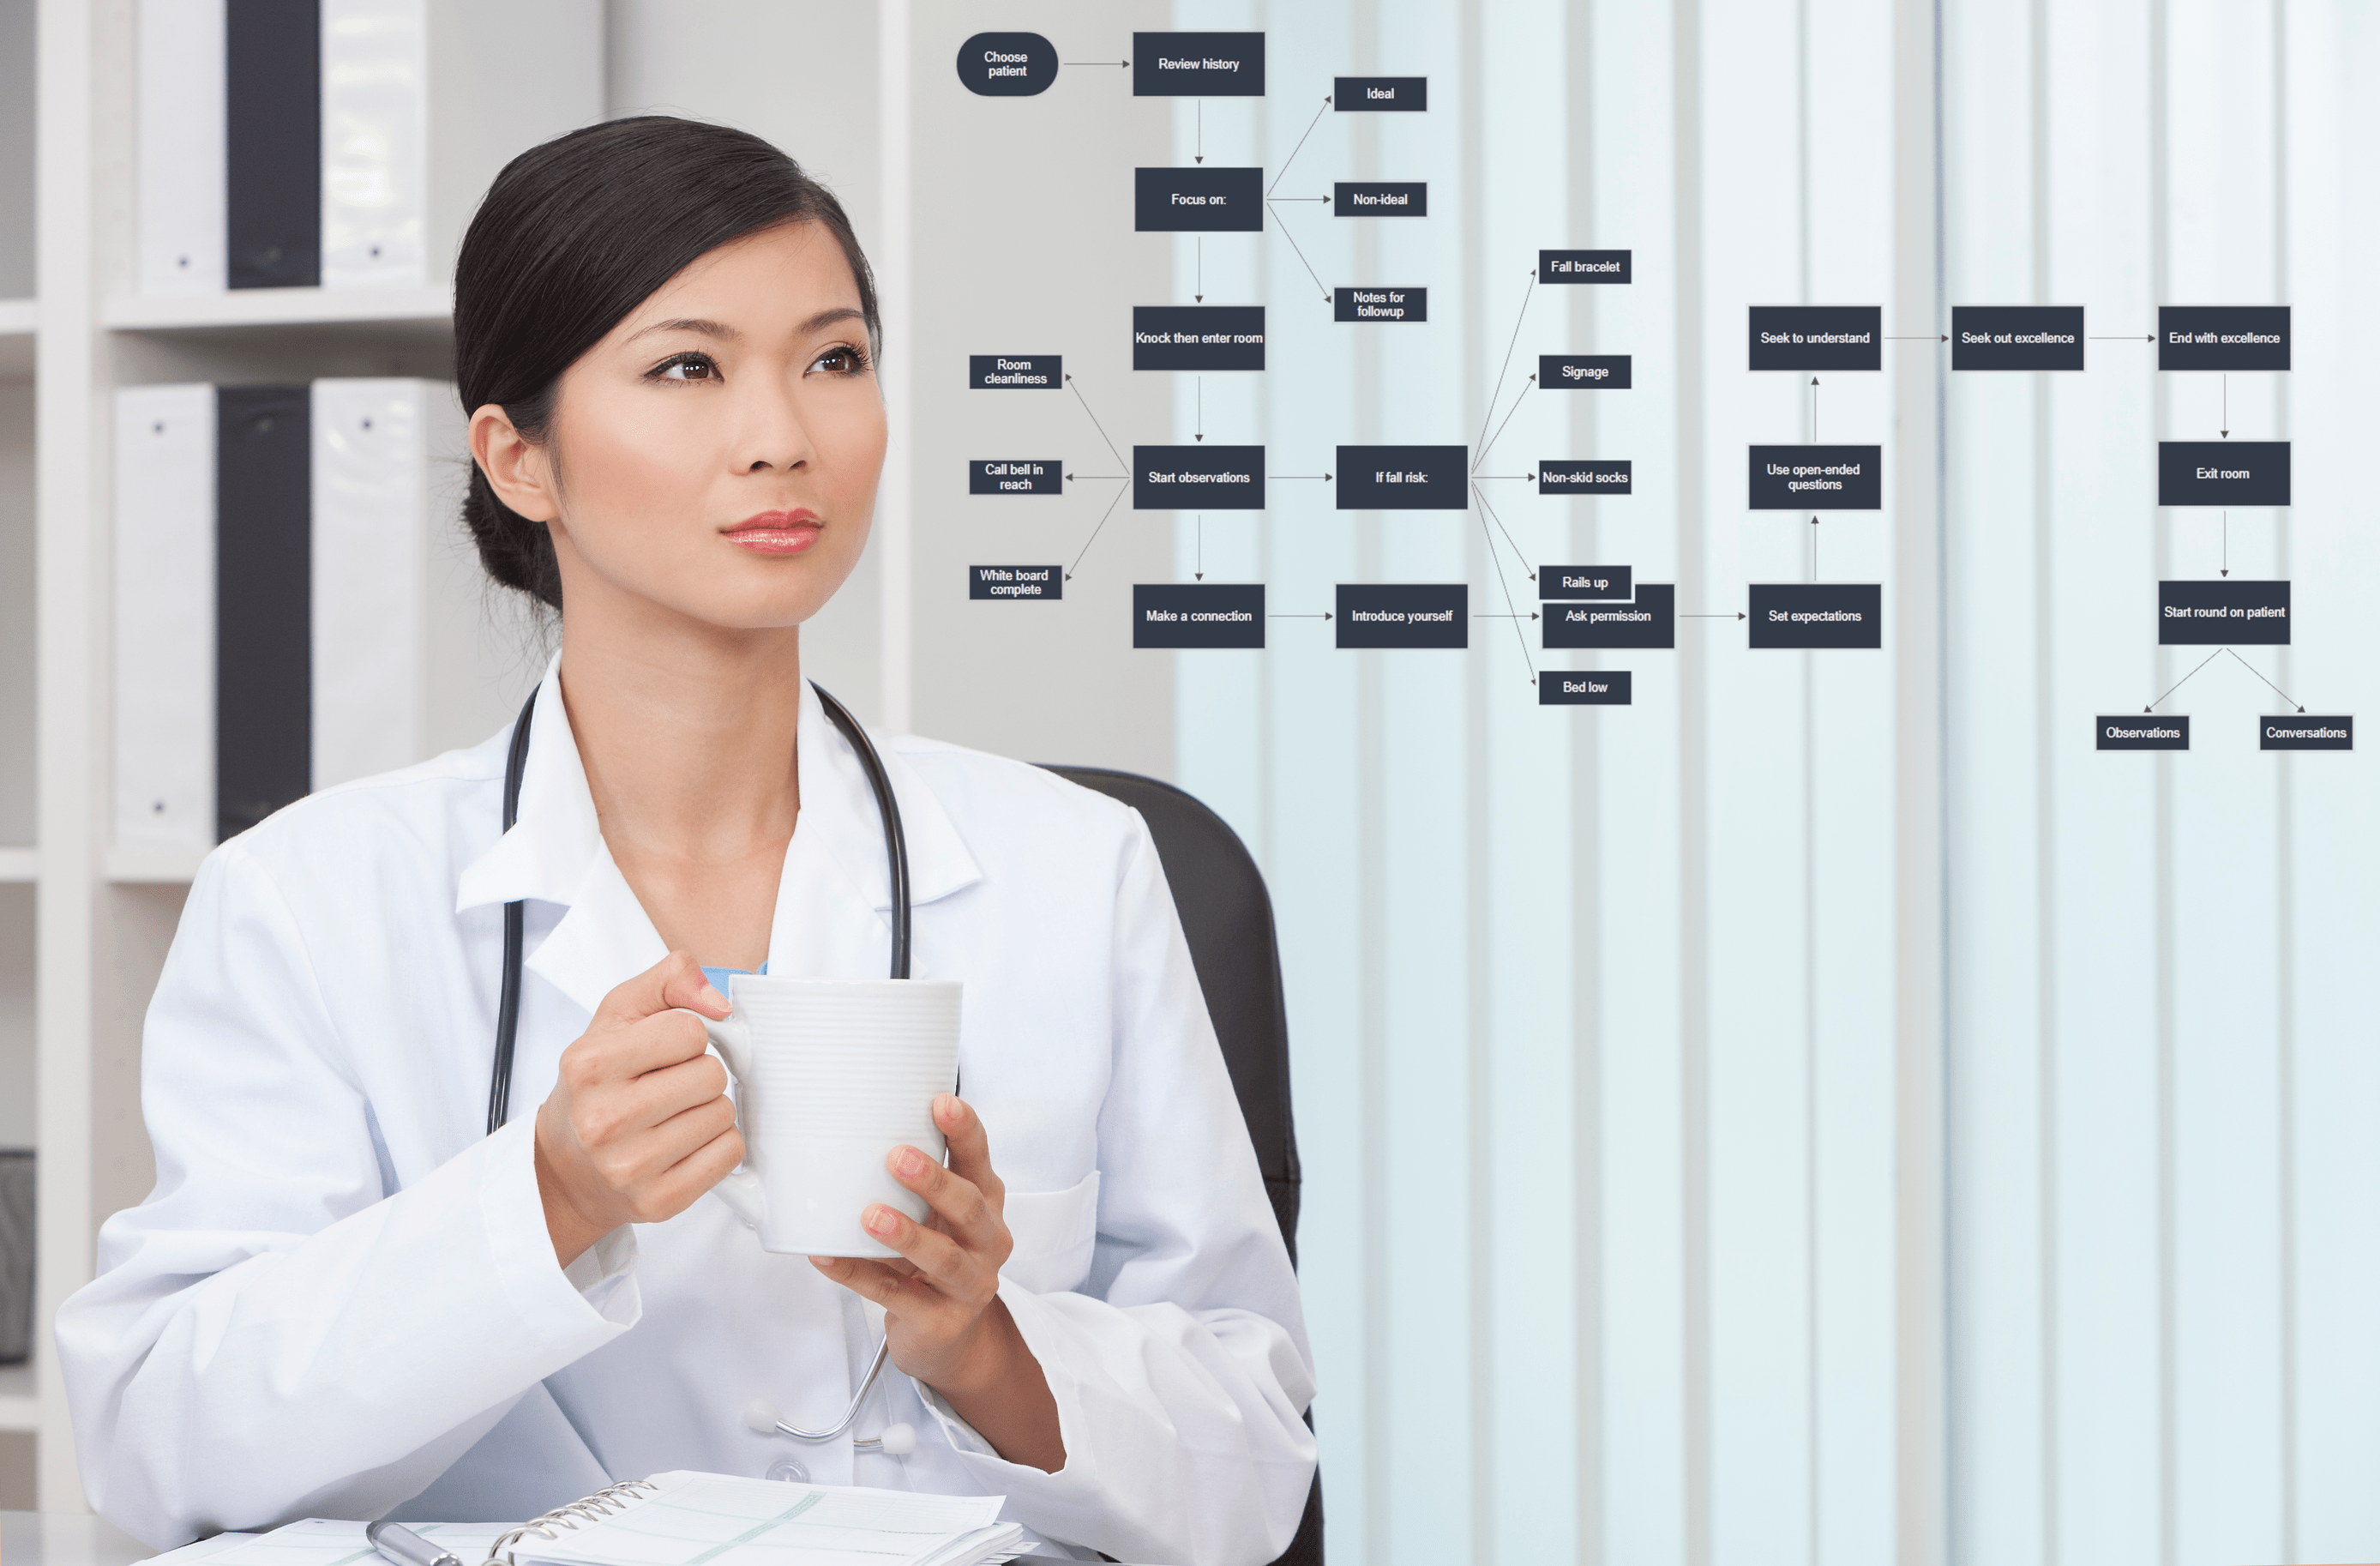 Nurse Leader reviewing flow chart for process improvement